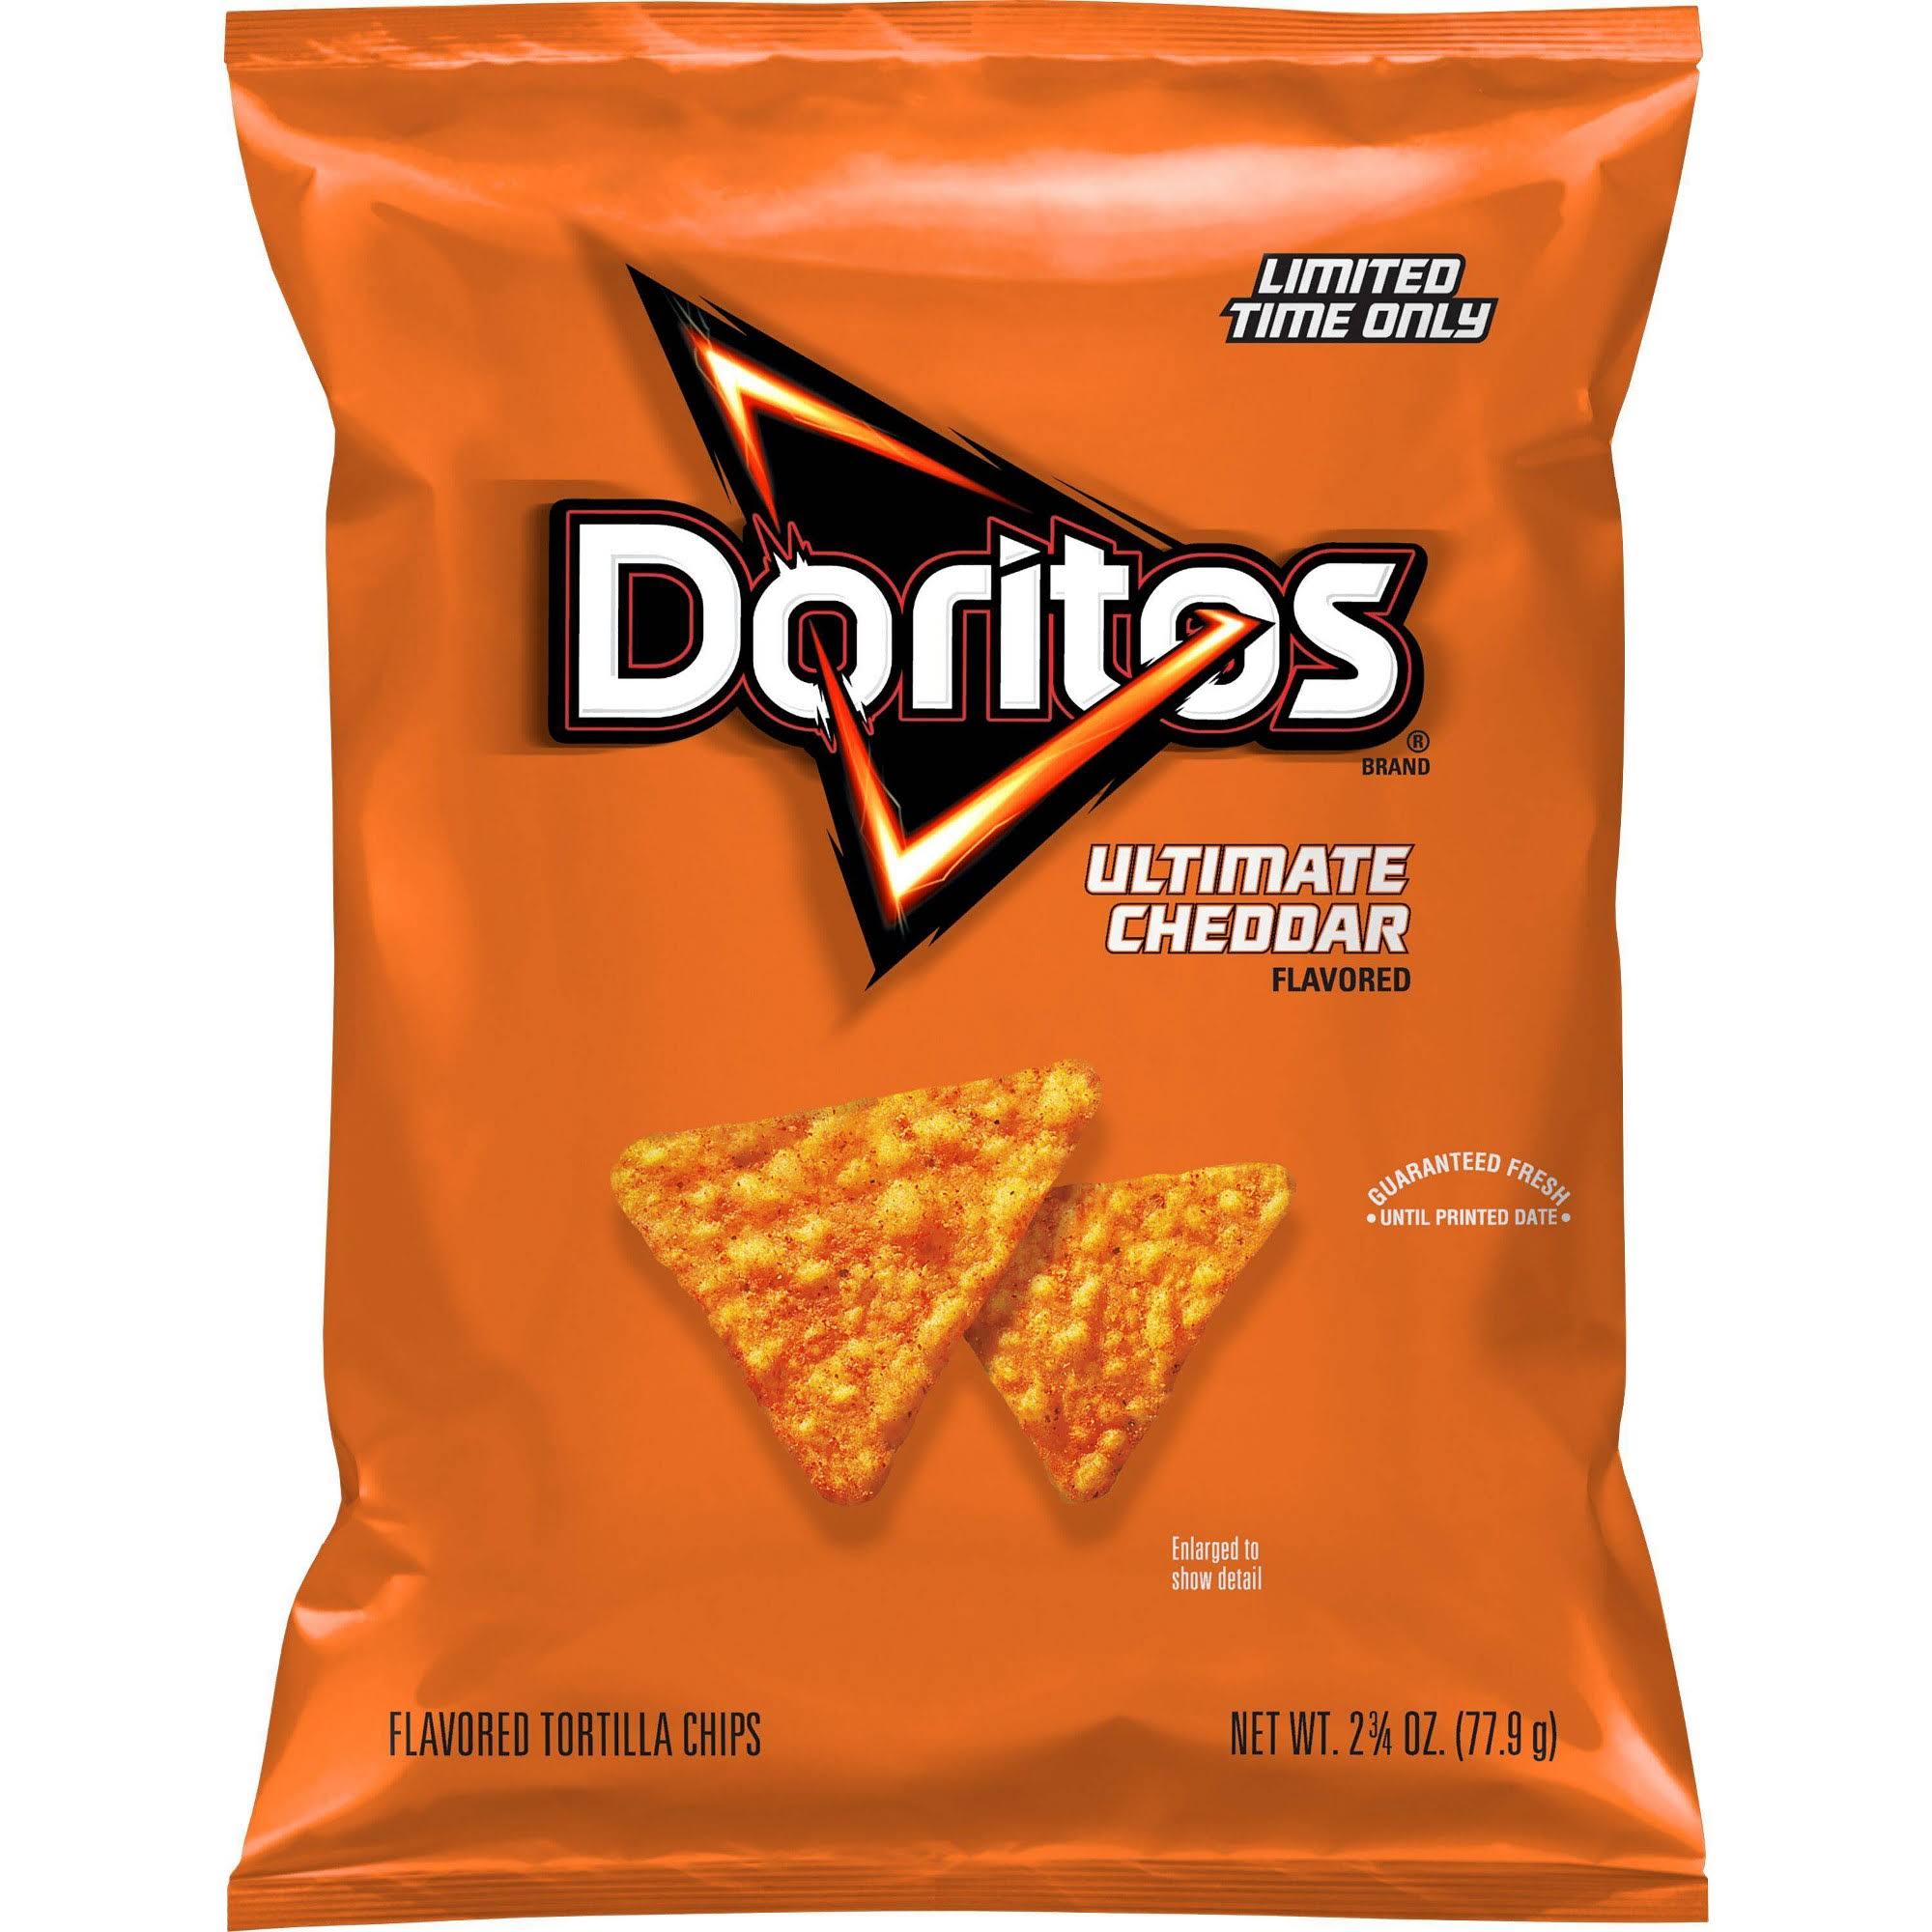 Doritos Tortilla Chips, Ultimate Cheddar Flavored - 2.75 oz